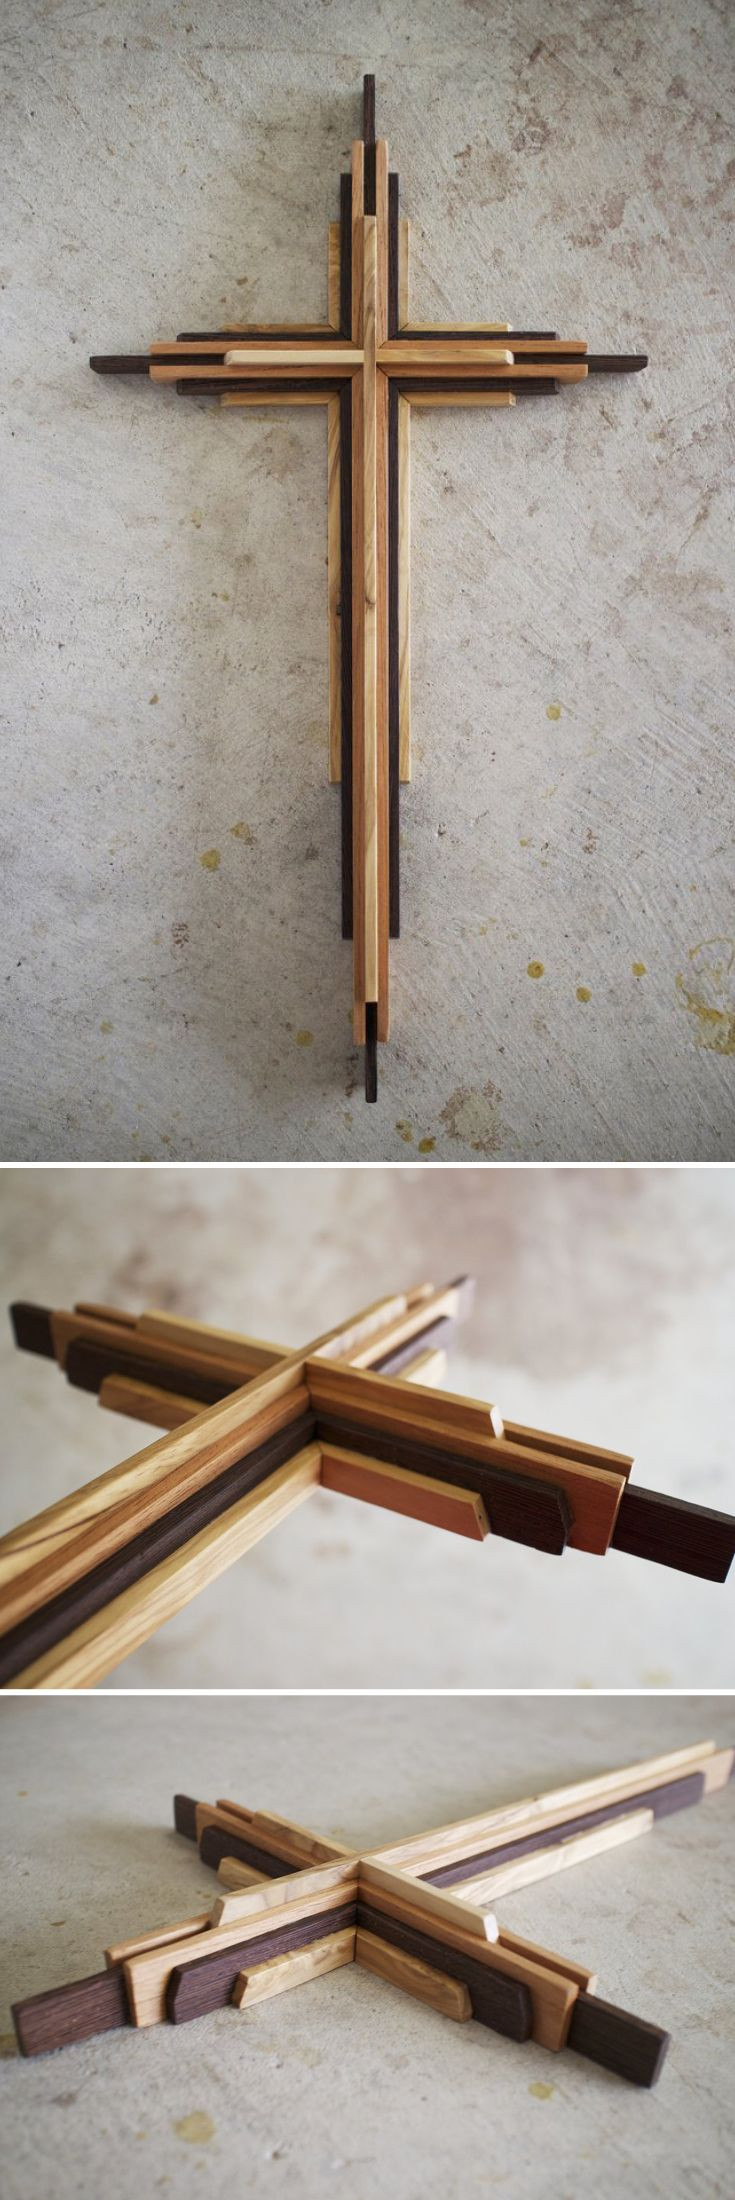 DIY Wood Crosses
 33 best Handmade Wooden Crosses images on Pinterest